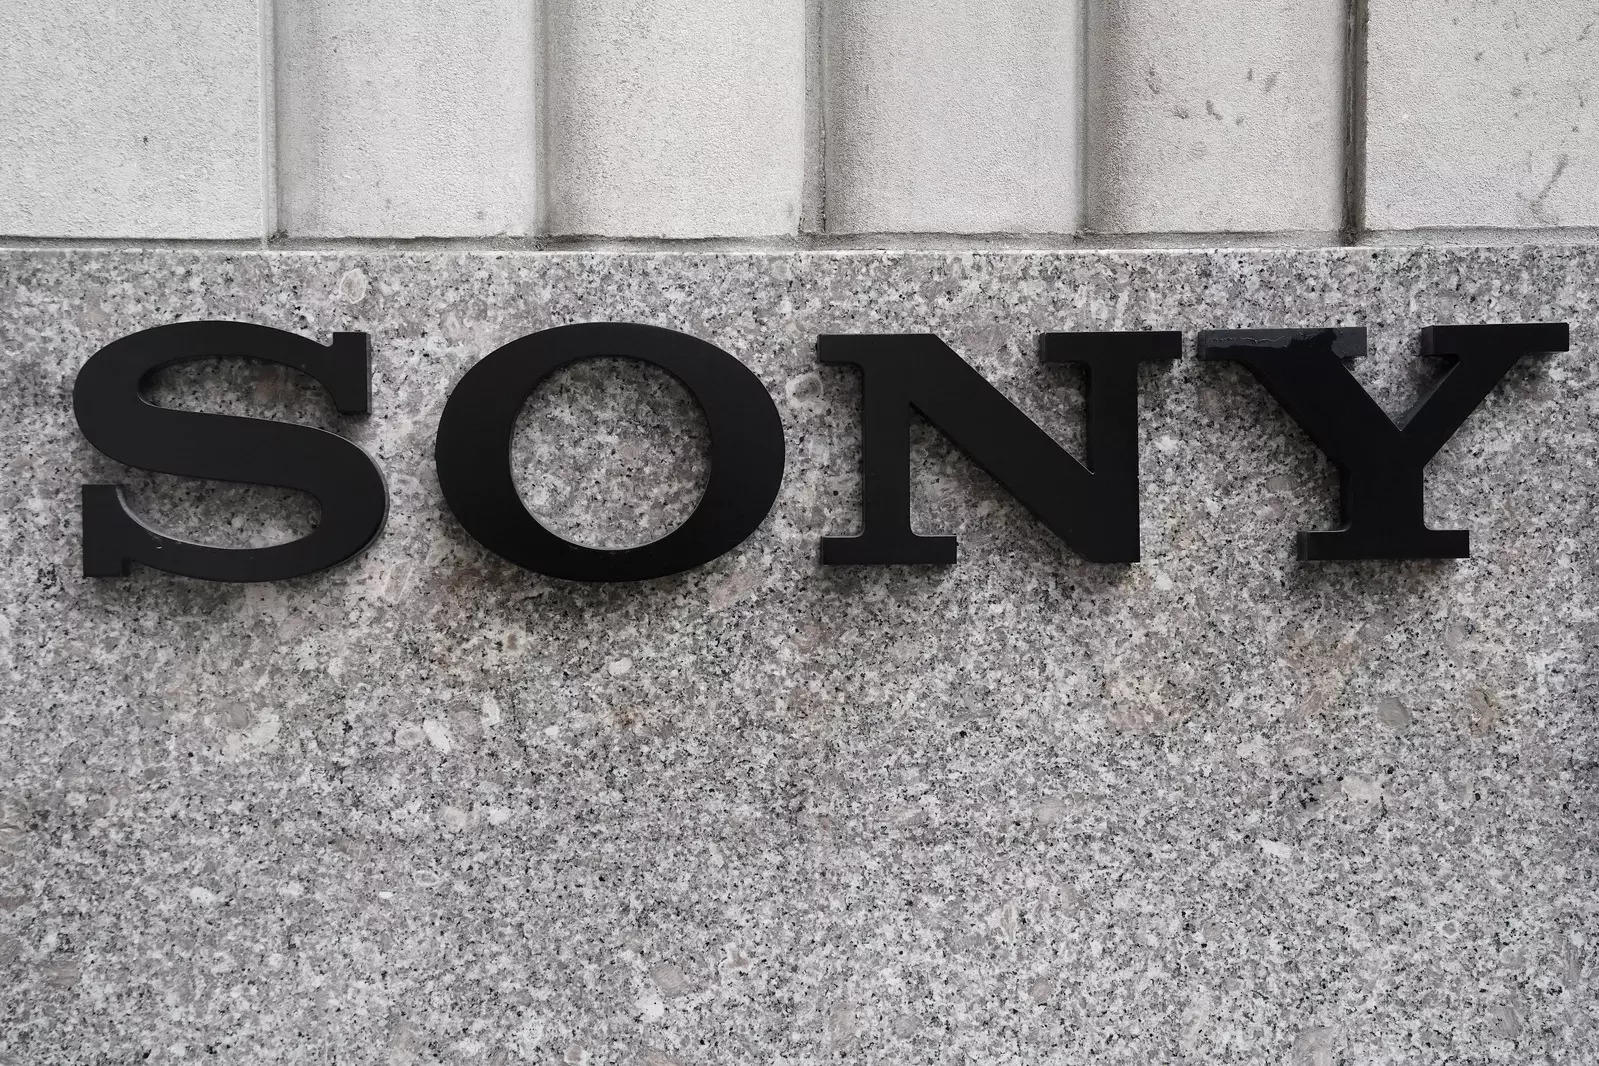 Sony to establish new electric vehicle company